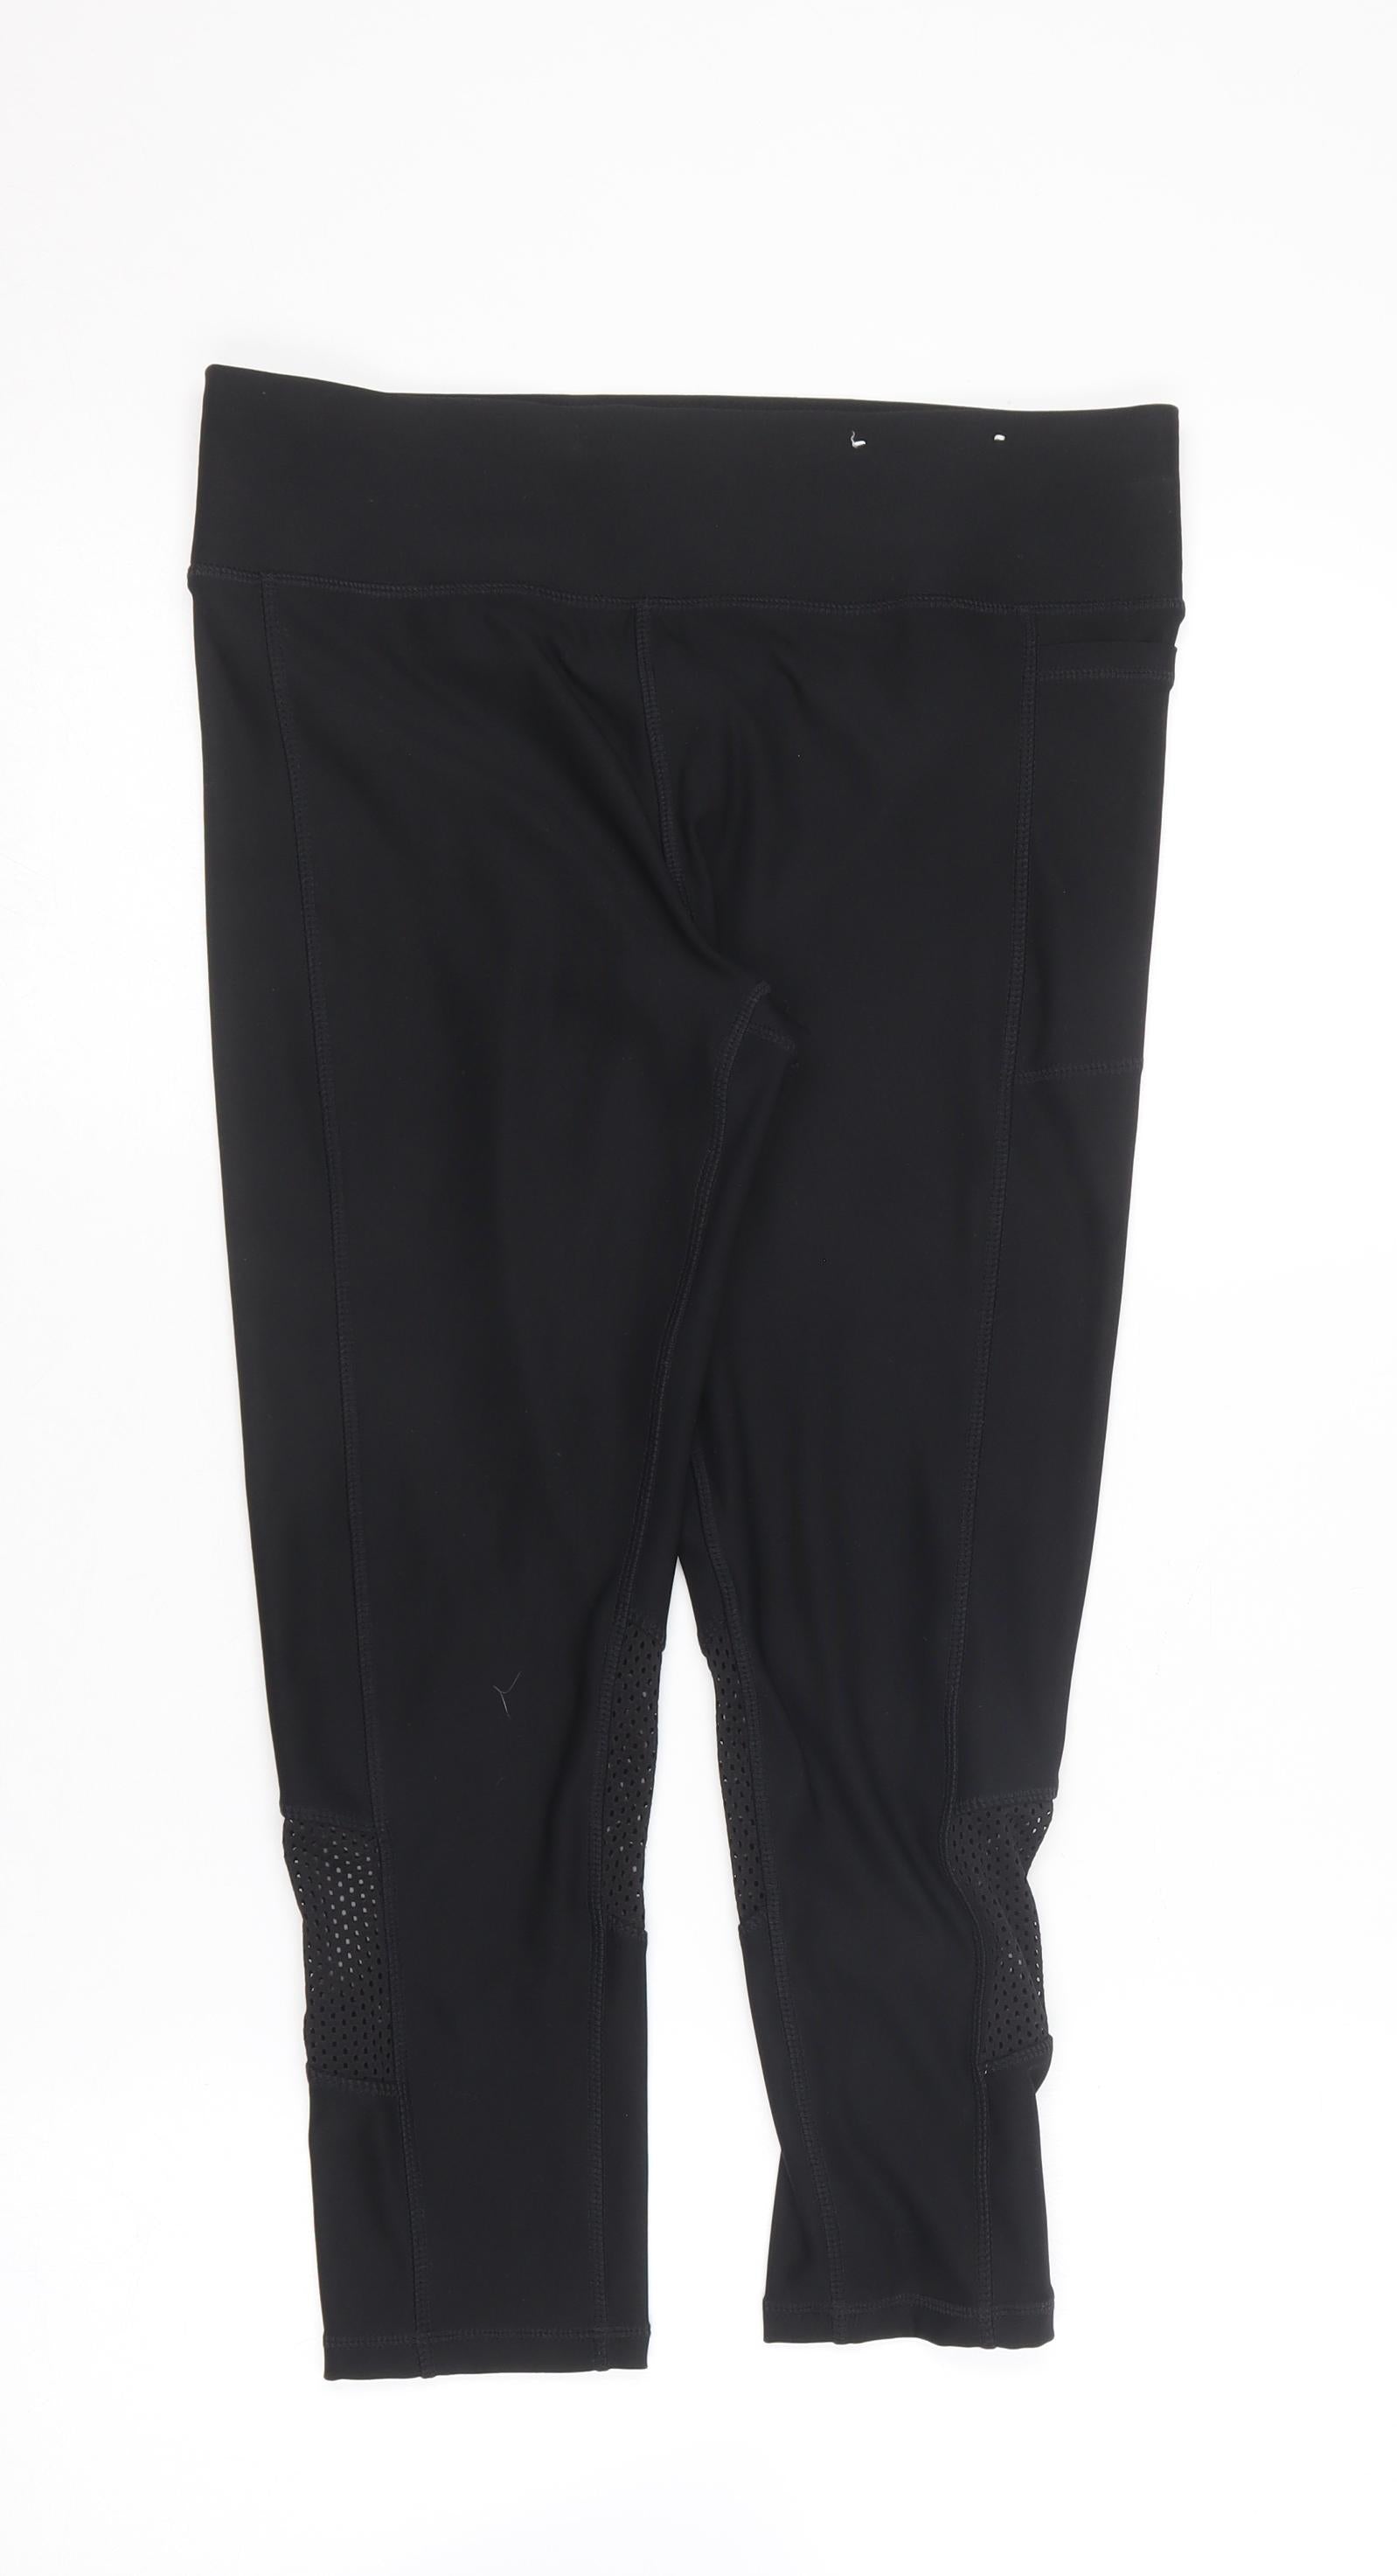 Athletic Works | Pants & Jumpsuits | Black Capri Leggings With Pockets |  Poshmark